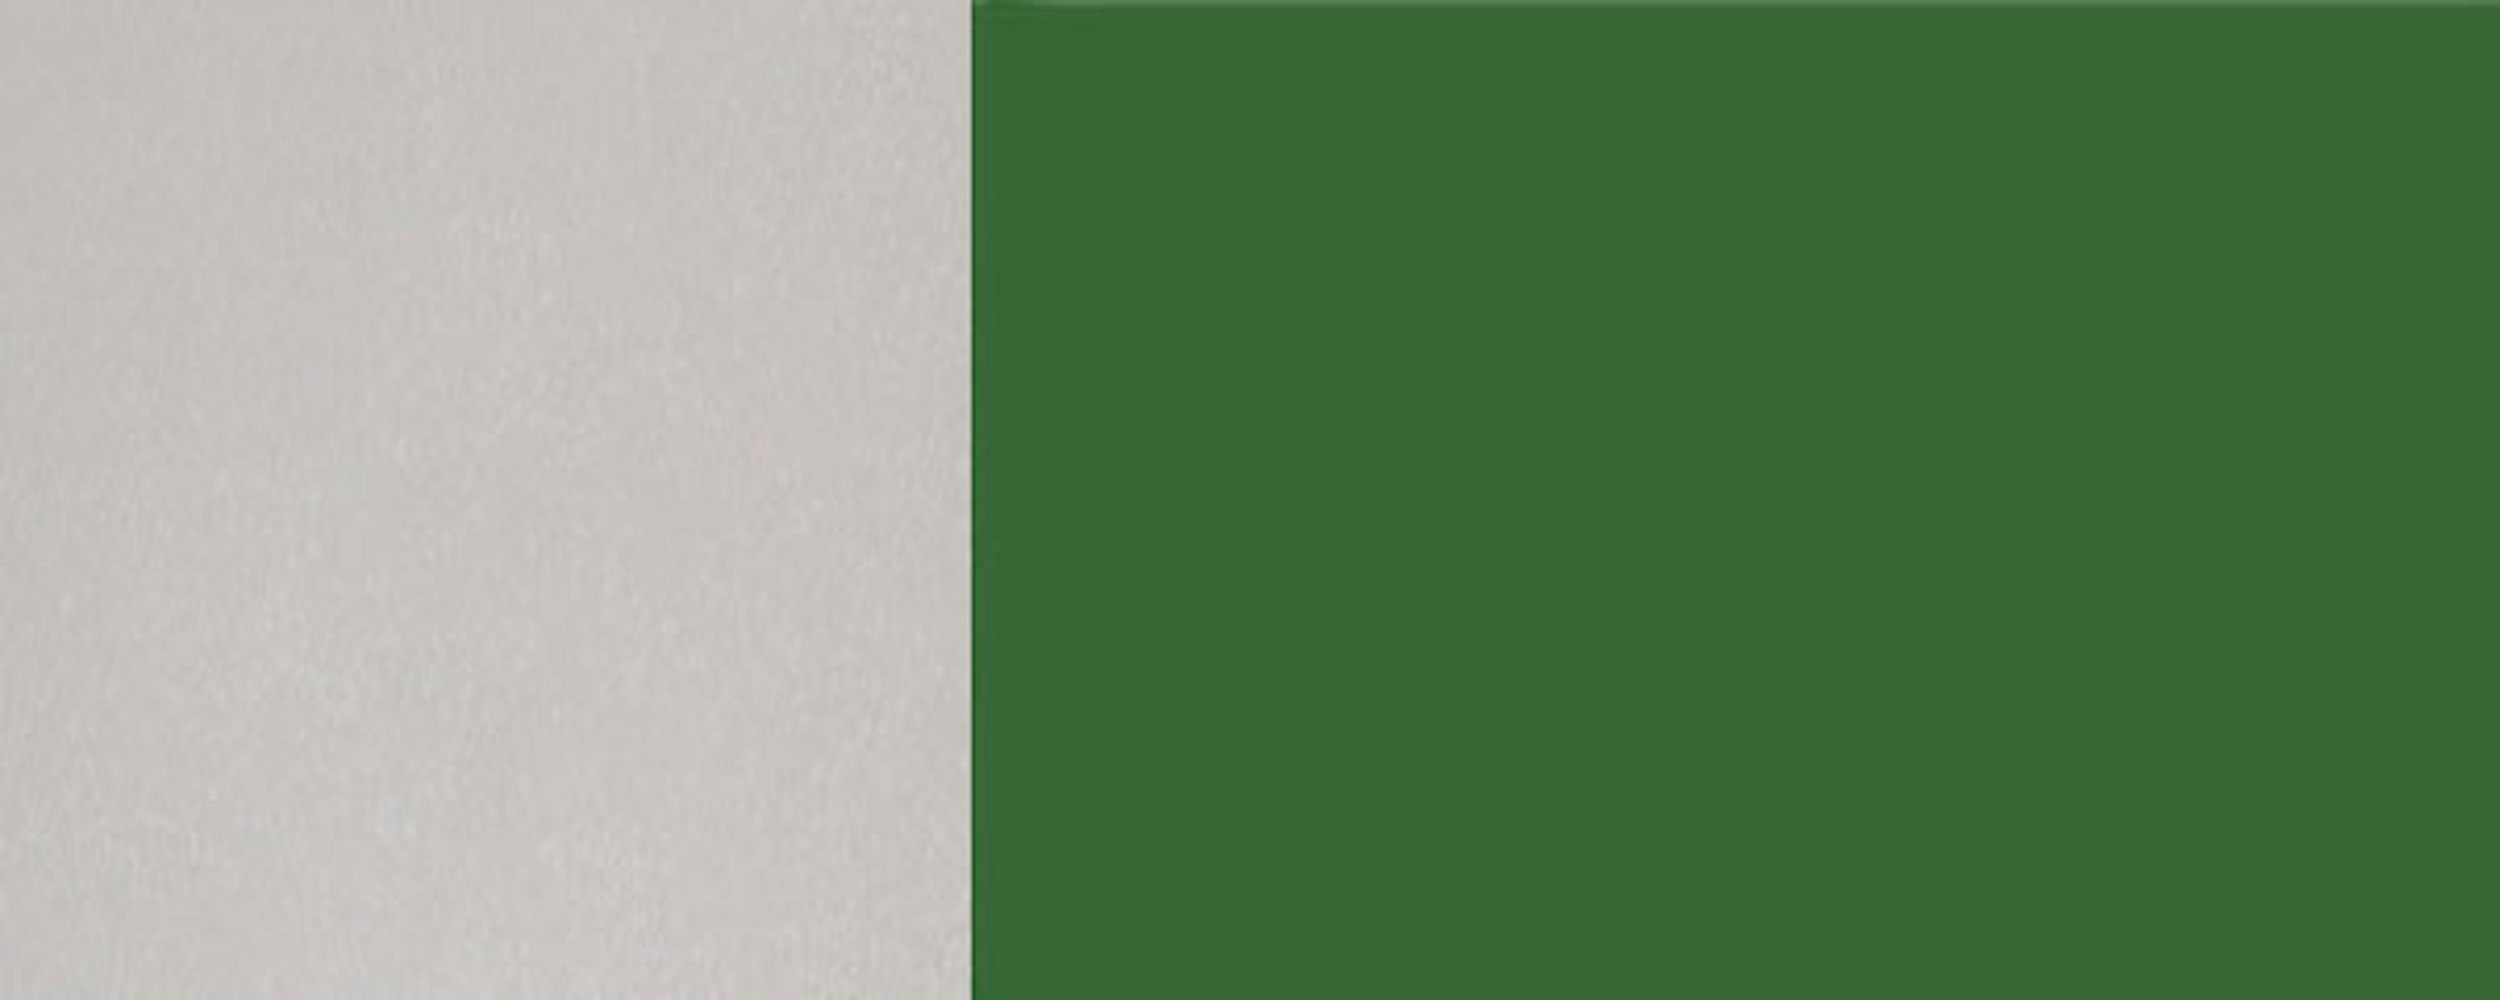 Front-, Florence und grifflos 6001 Glashängeschrank 45cm 1-türig Ausführung smaragdgrün Korpusfarbe Hochglanz wählbar RAL Feldmann-Wohnen (Florence)